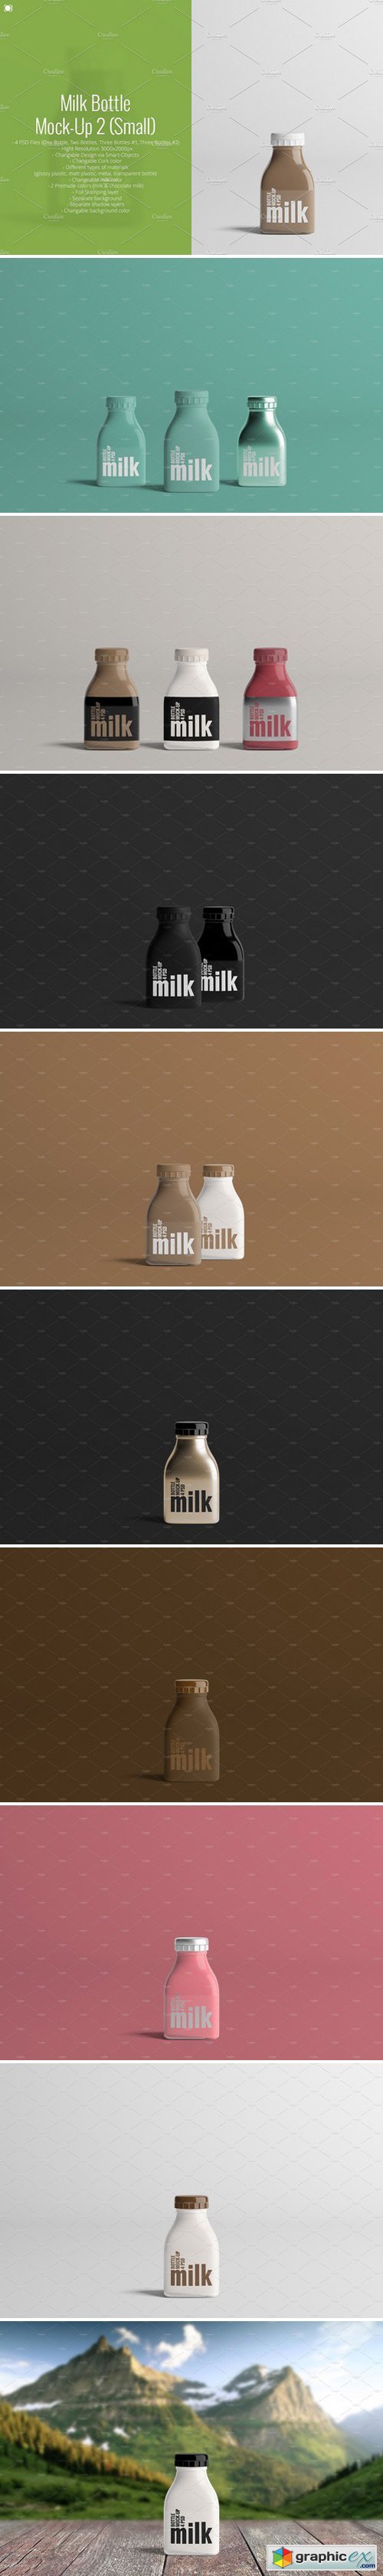 Milk Bottle Mock-Up 2 (Small)